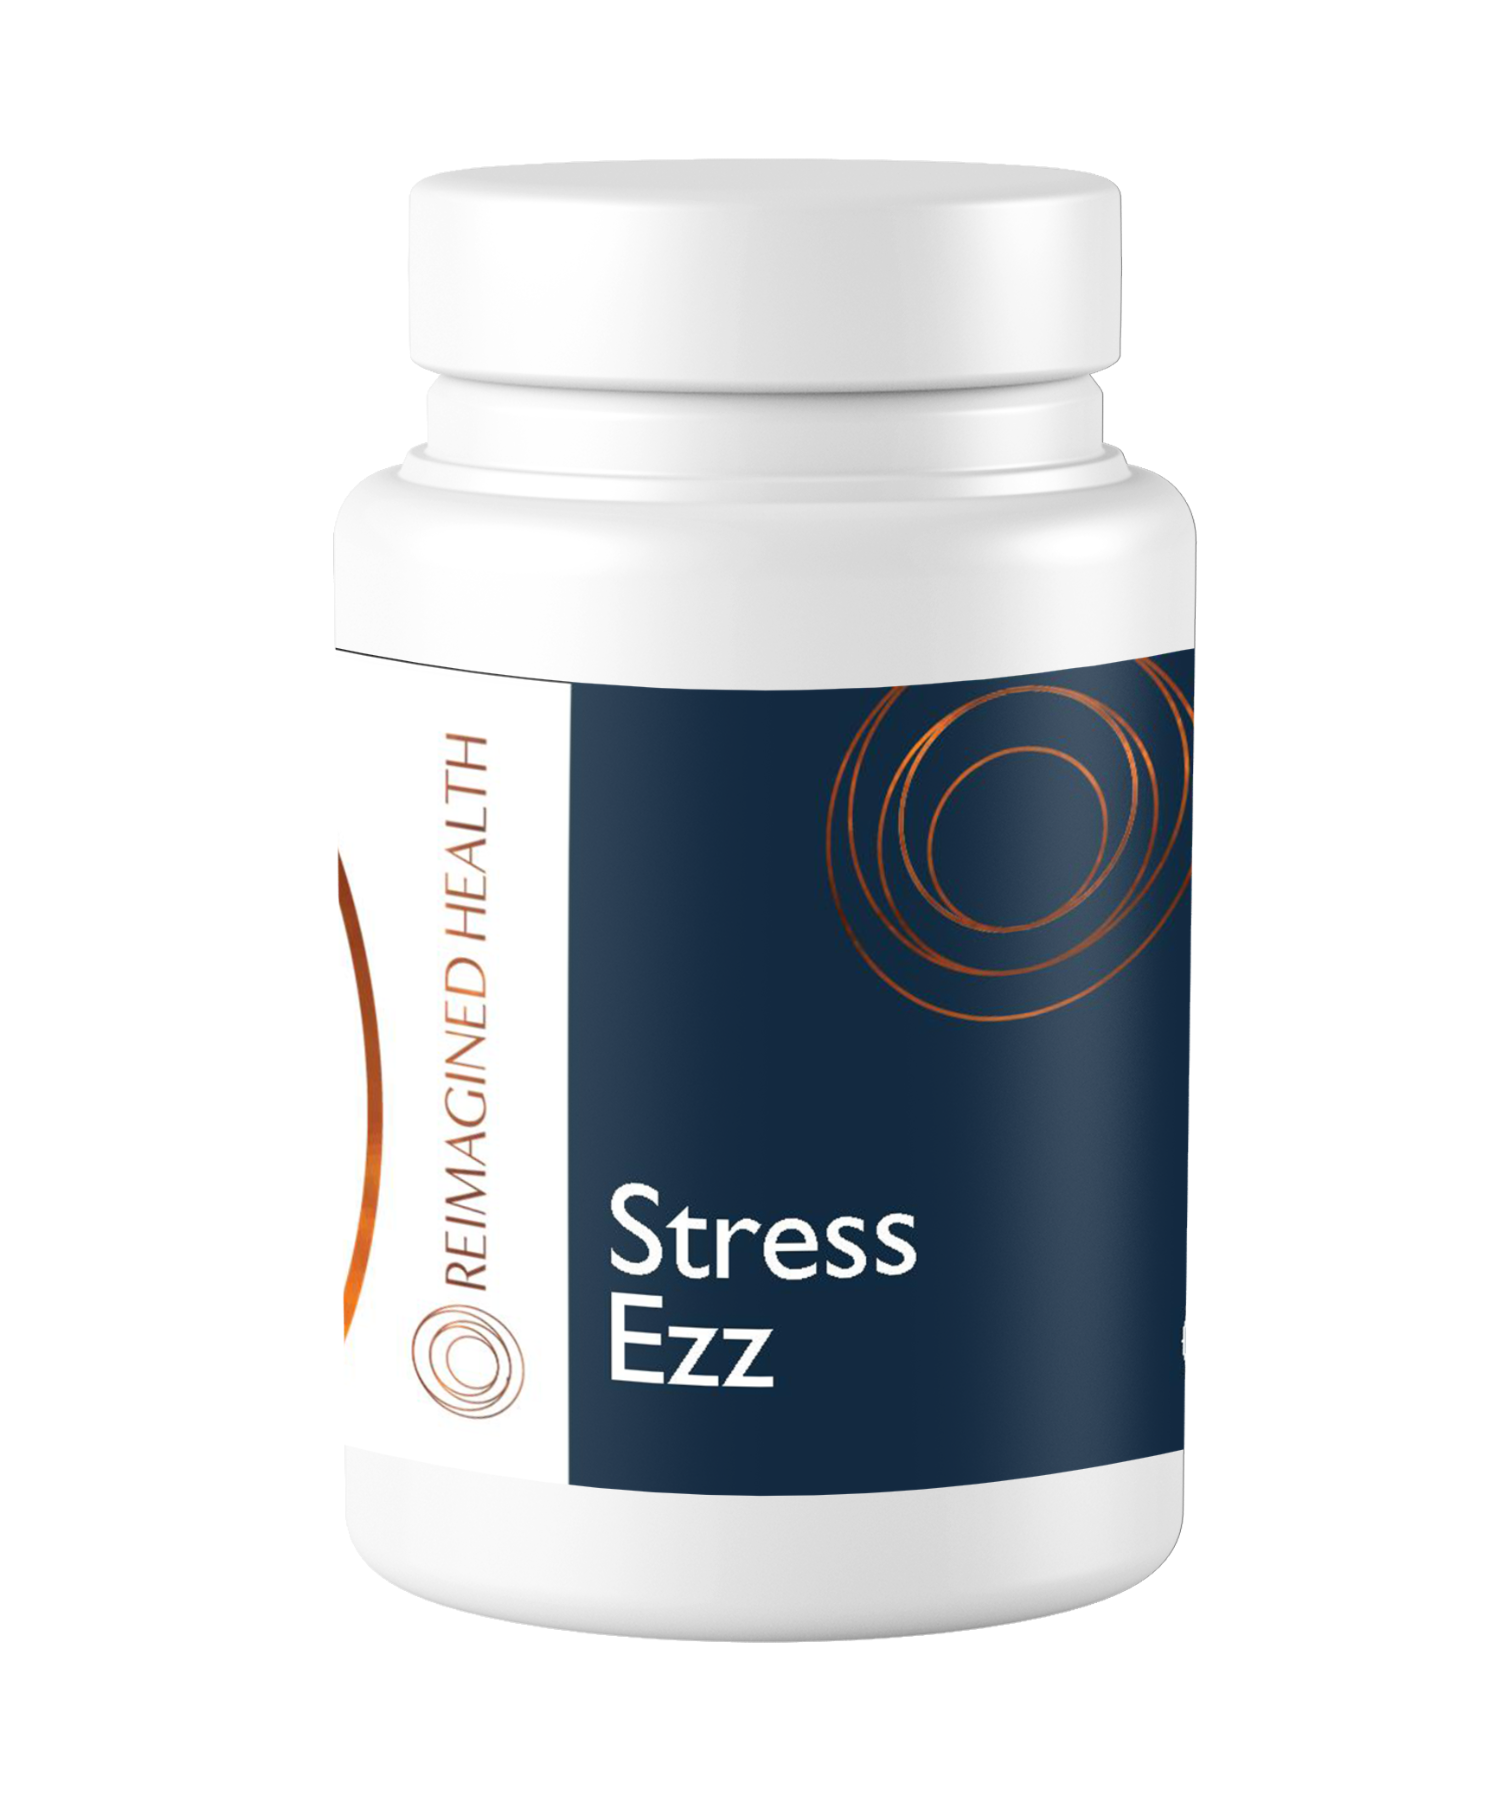 Stress-Ezz-C297-1.png